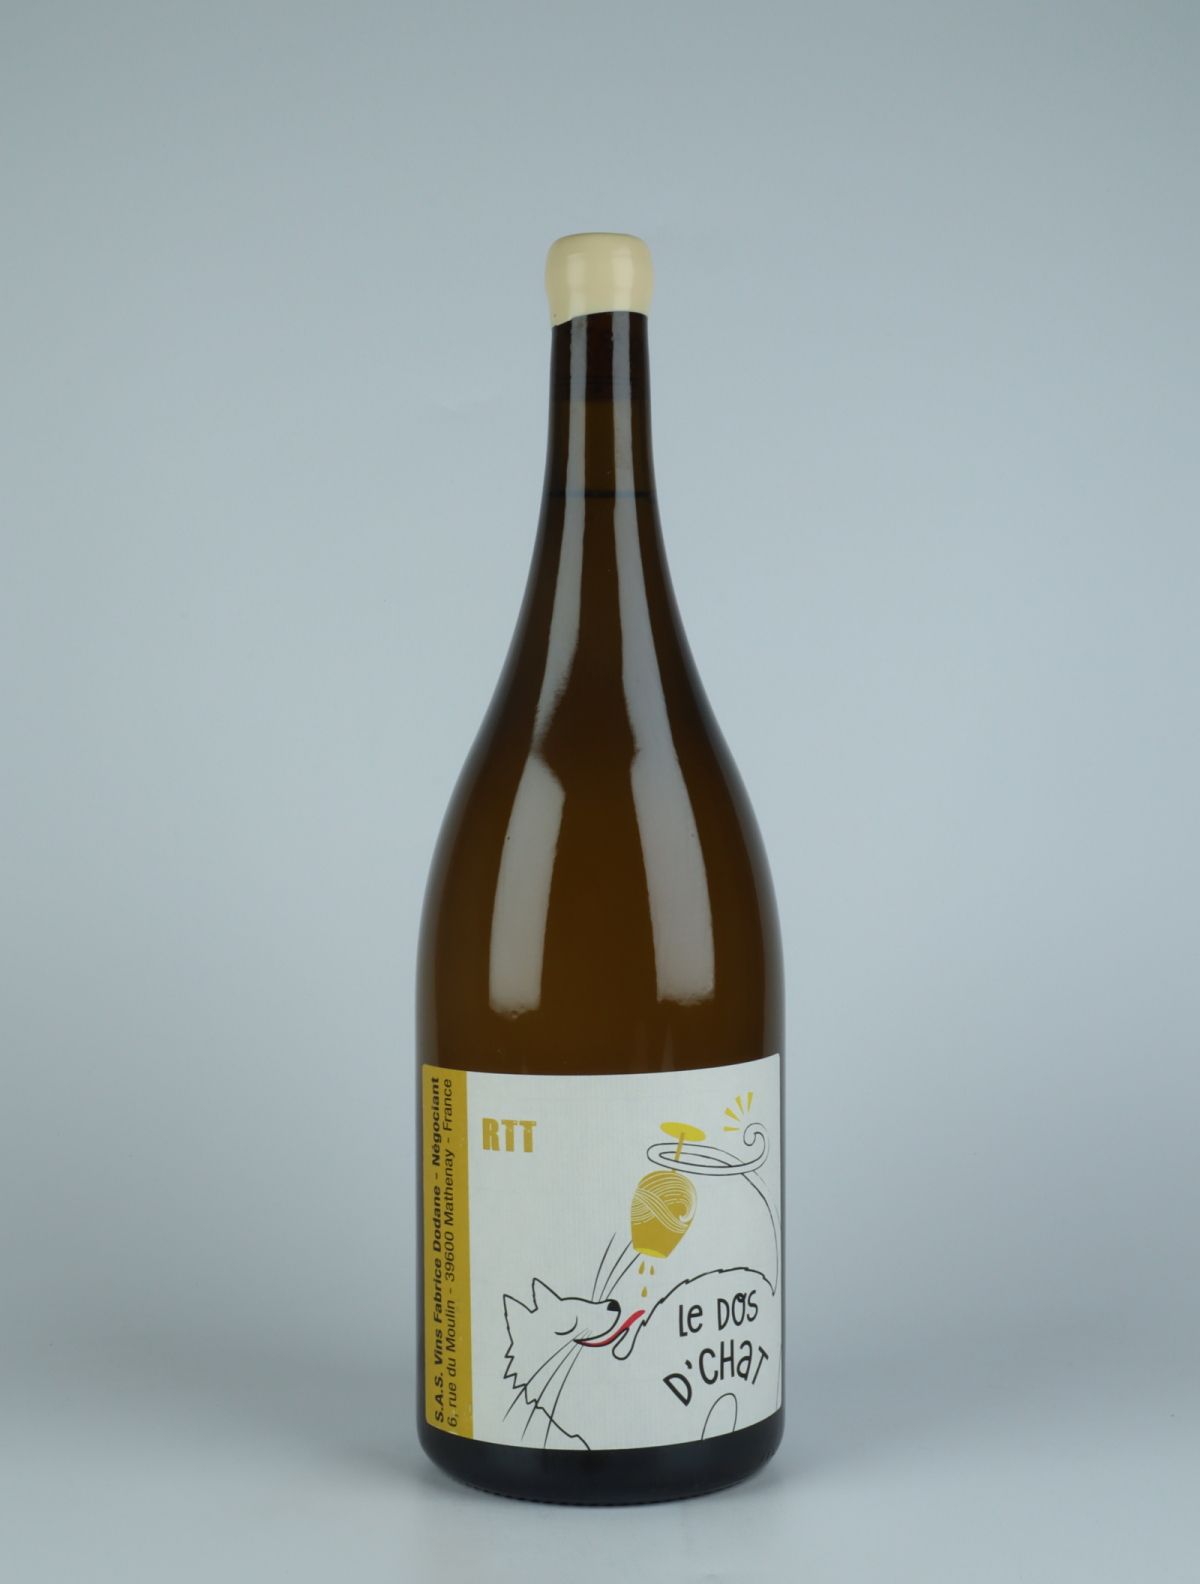 A bottle 2021 RTT Riesling White wine from Fabrice Dodane, Jura in France